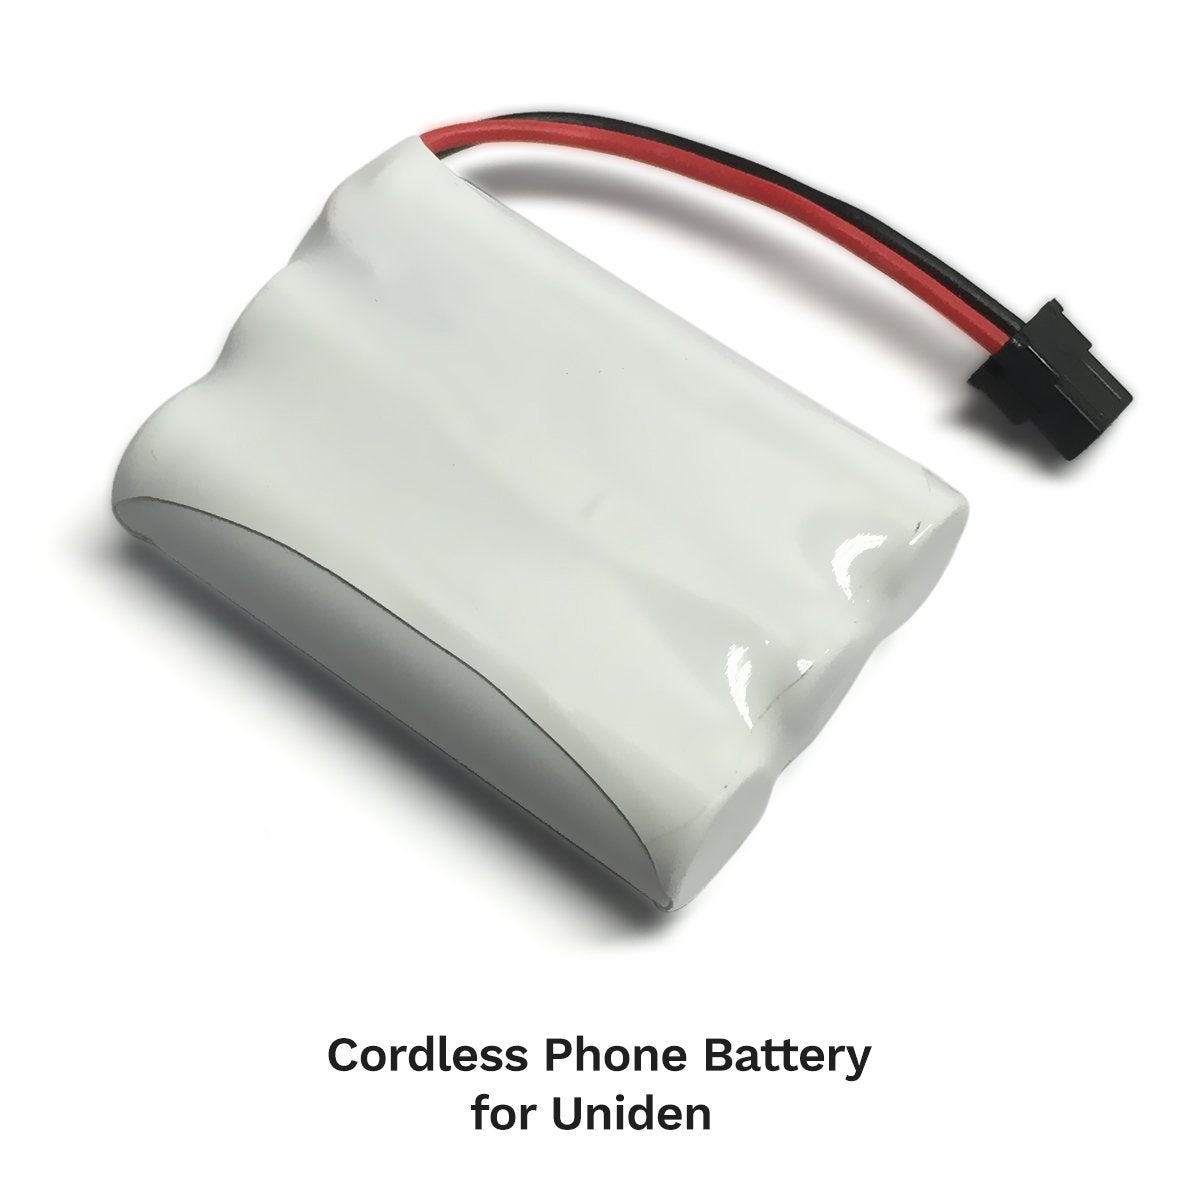 Uniden DCT7585-4 Cordless Phone Battery